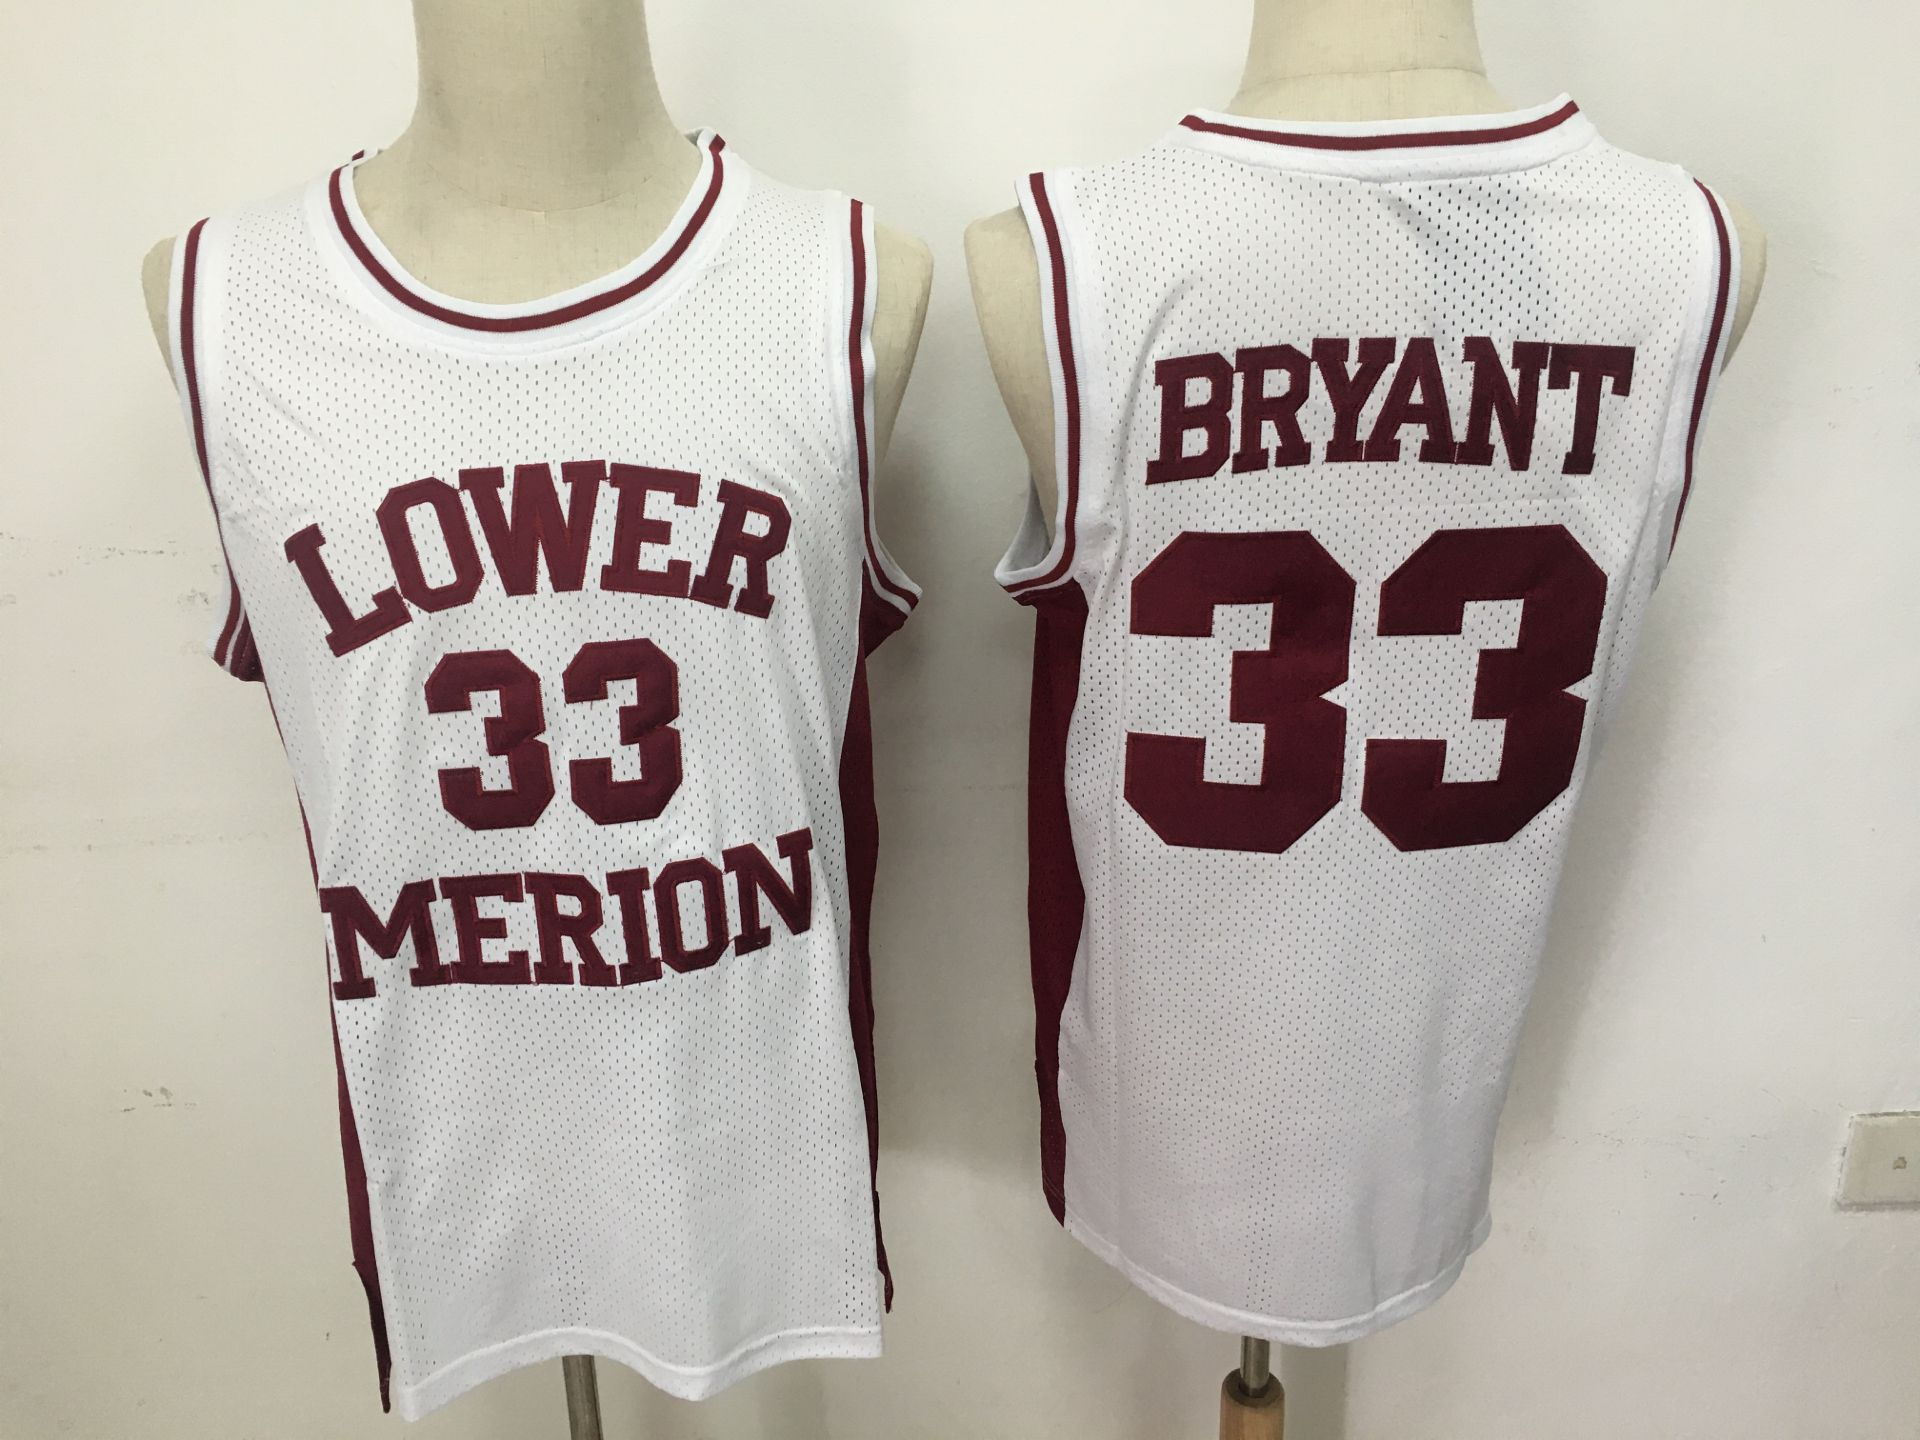 Lower Merion Aces 33 Kobe Bryant White High School Mesh Basketball Jersey